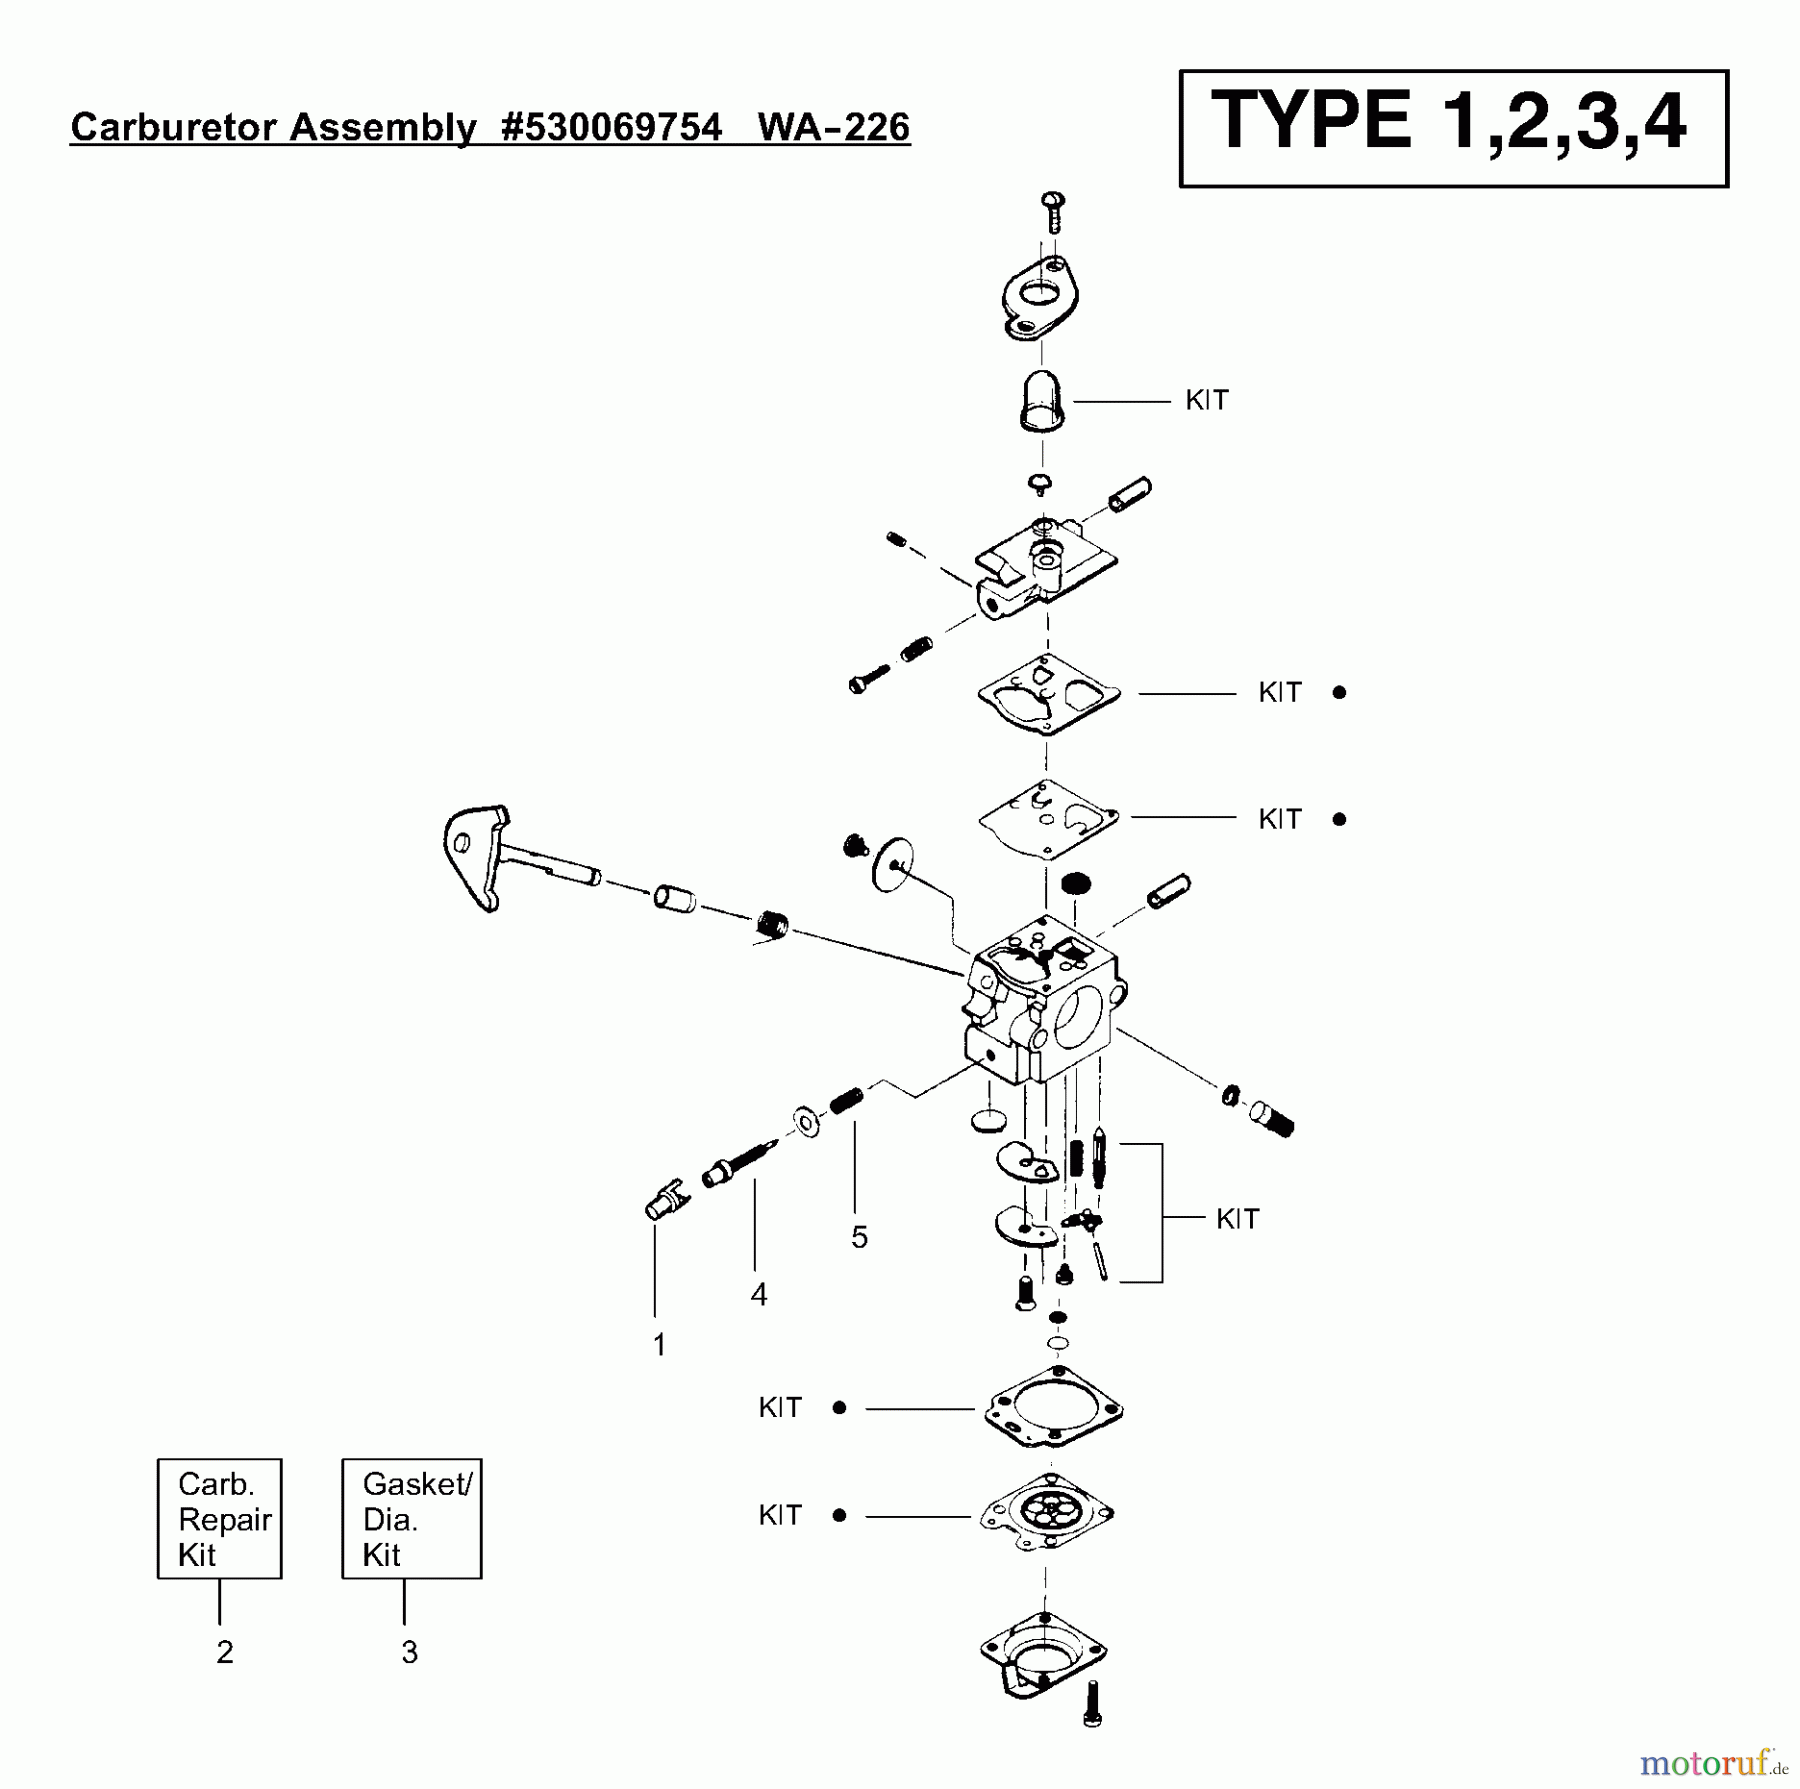  Poulan / Weed Eater Motorsensen, Trimmer SST25 (Type 4) - Weed Eater Featherlite HO String Trimmer Carburetor Assembly (WA226) P/N 530069754